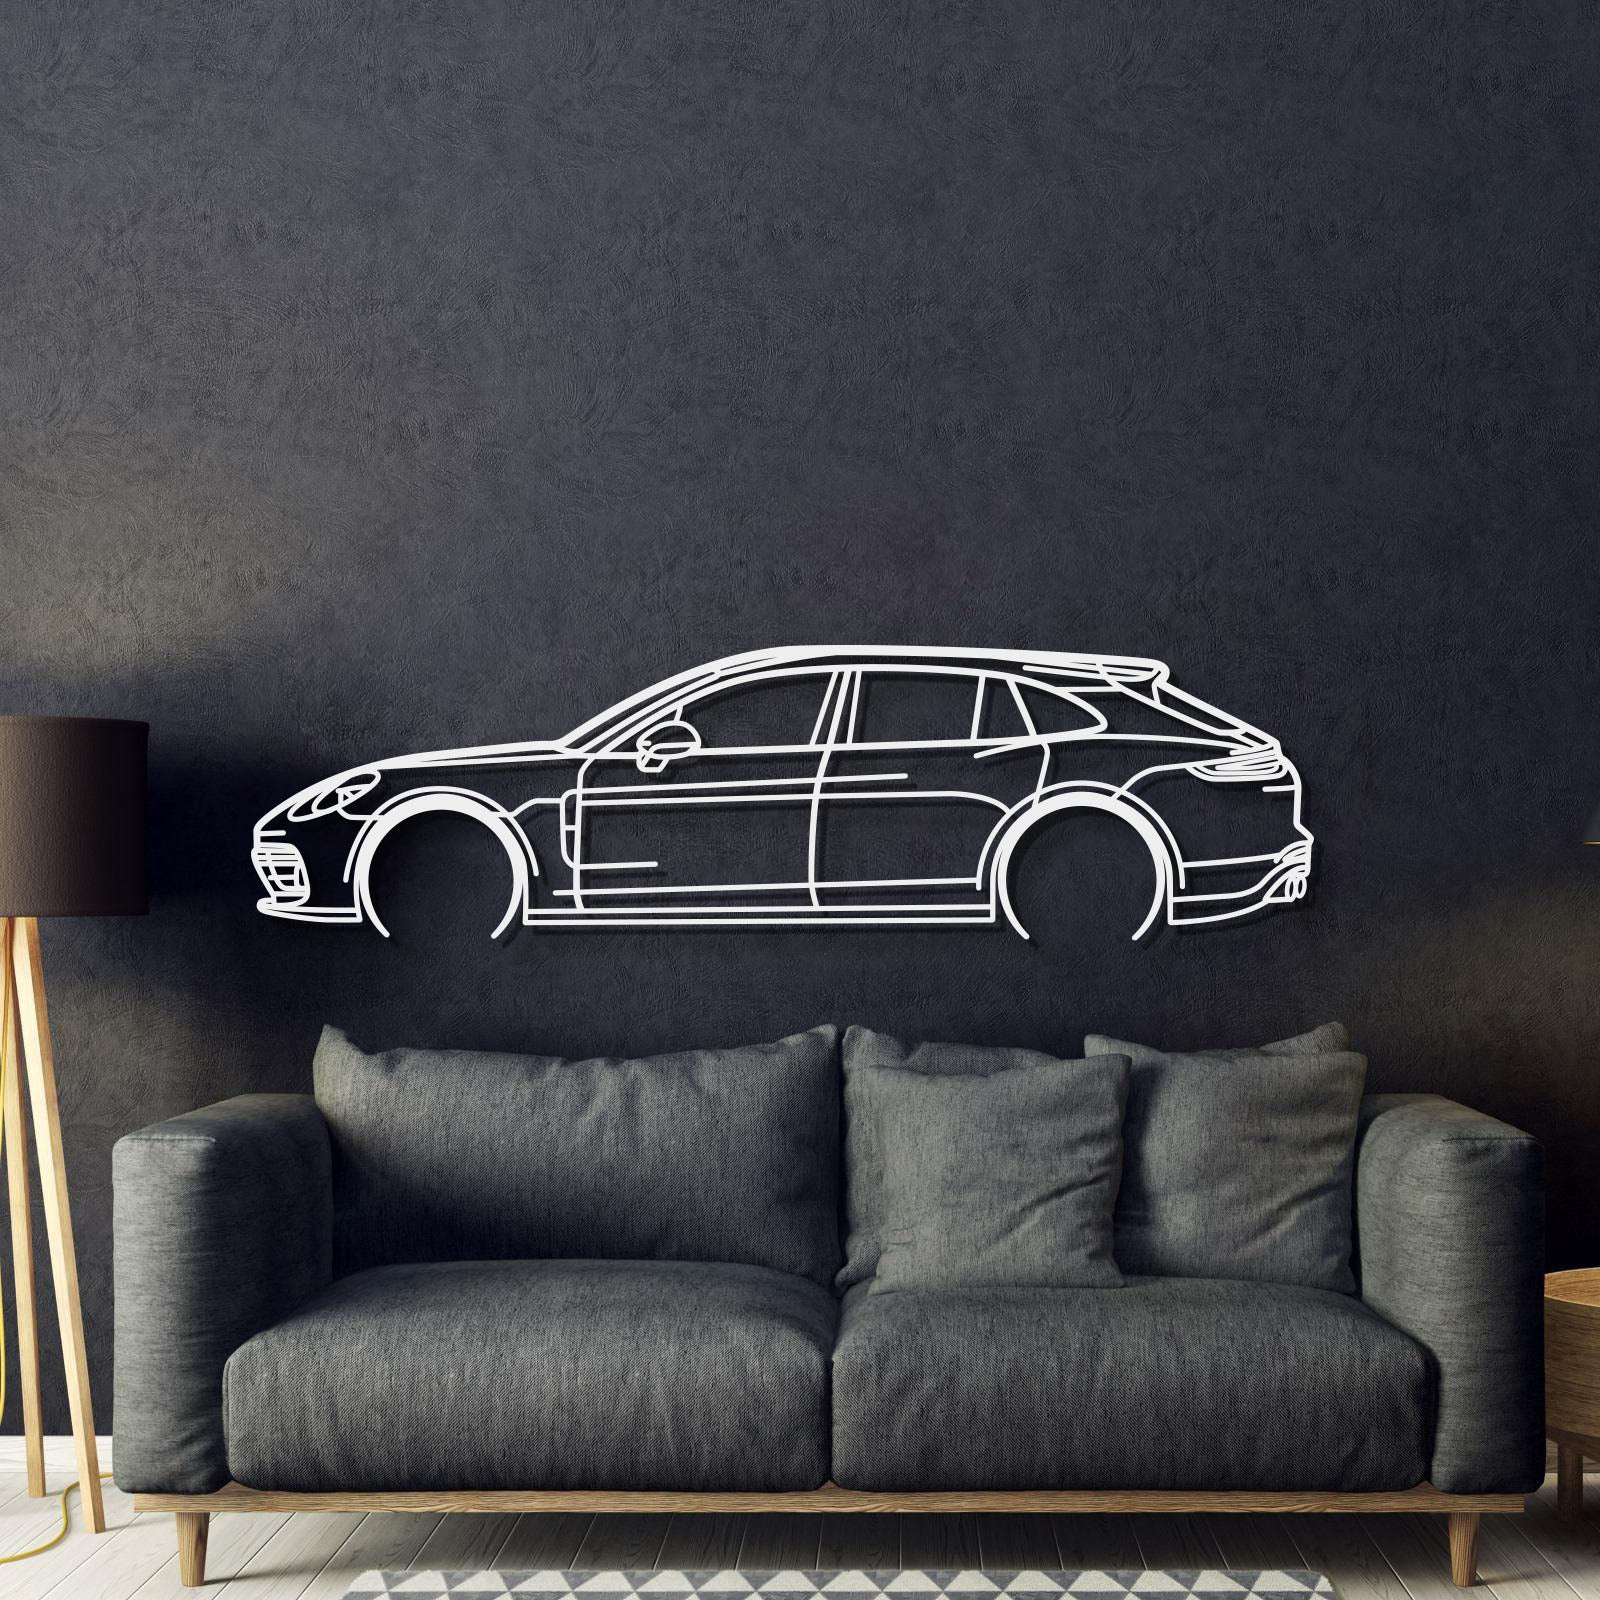 Detailed Metal Car Wall Art - MT0803